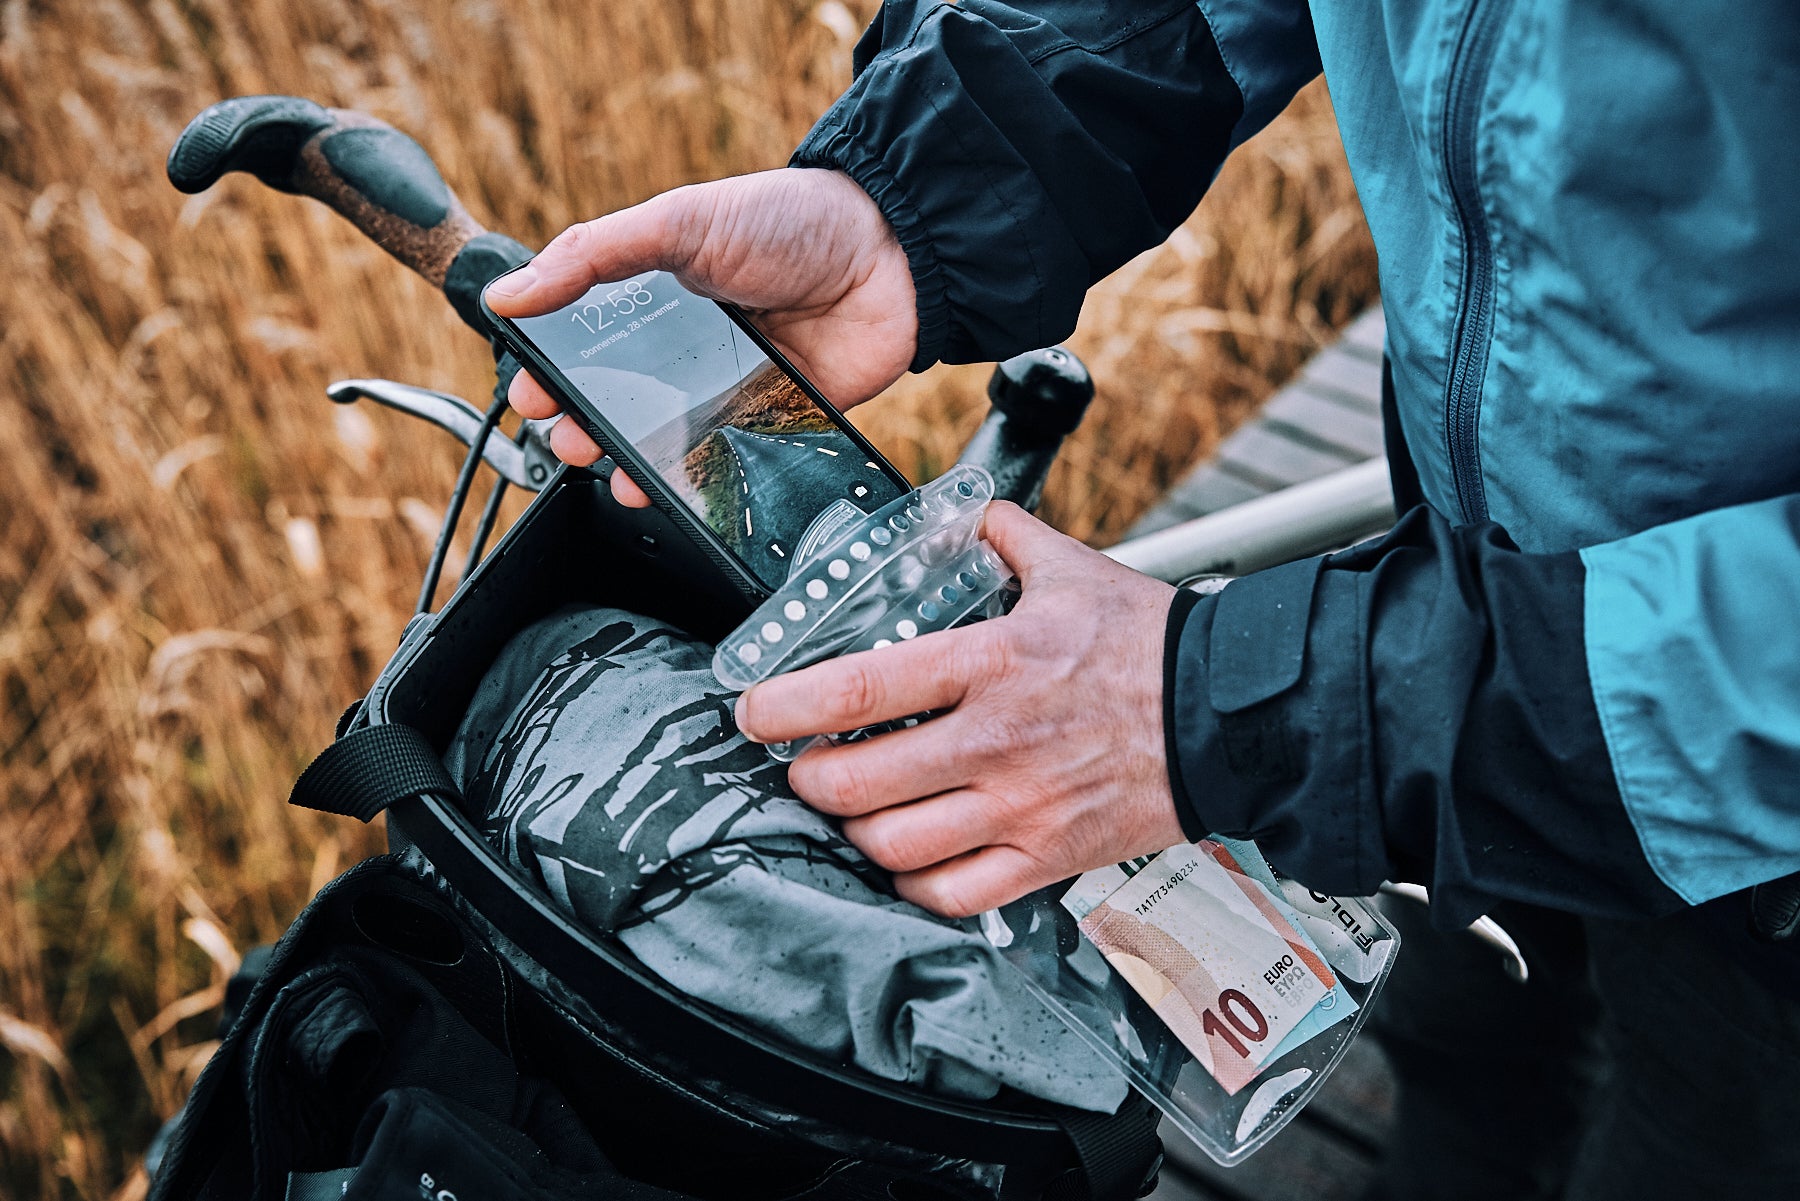 Man on bike putting cell phone into Fidlock Hermetic dry bag